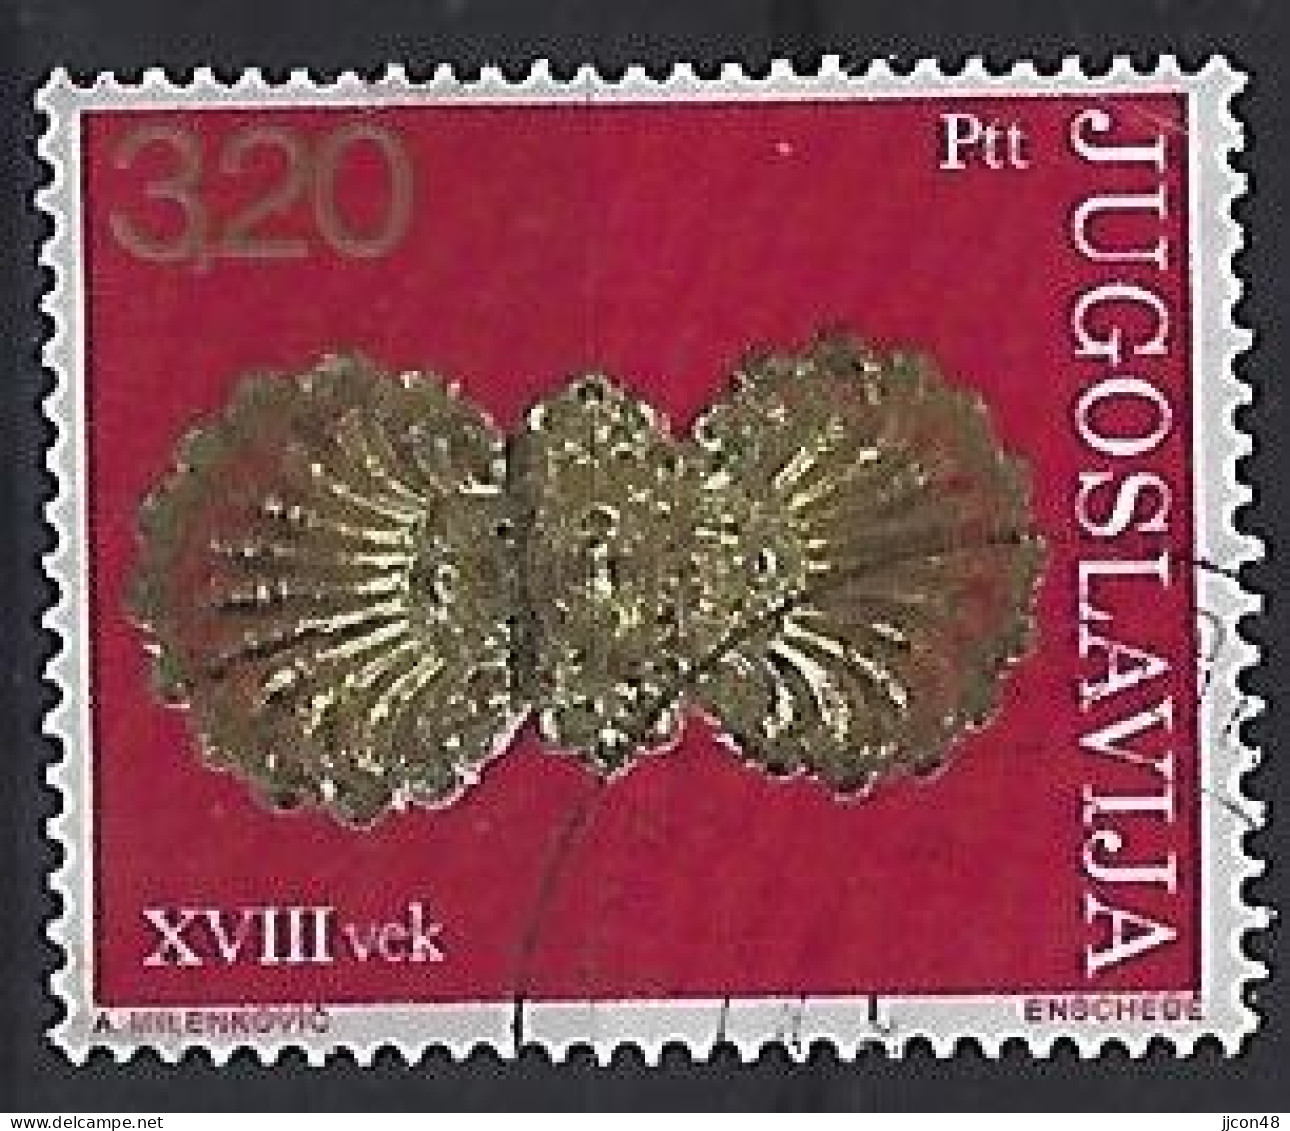 Jugoslavia 1975  Alter Schmuck (o) Mi.1589 - Used Stamps